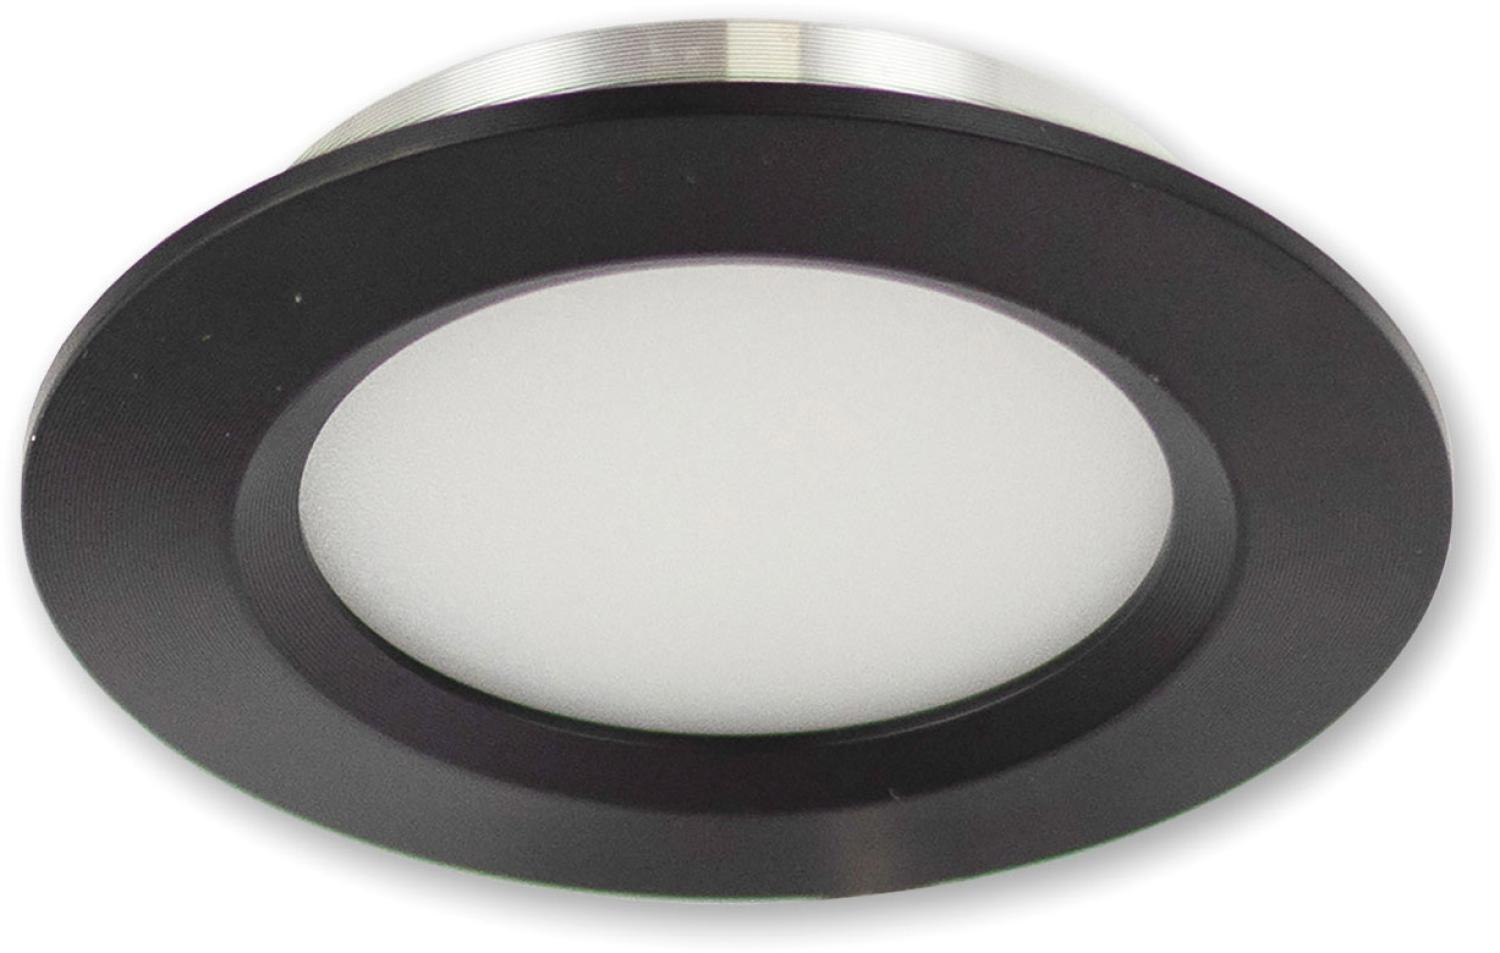 ISOLED LED Möbeleinbaustrahler MiniAMP schwarz, rund, 3W, 120°, 24V DC, warmweiß 3000K, dimmbar Bild 1